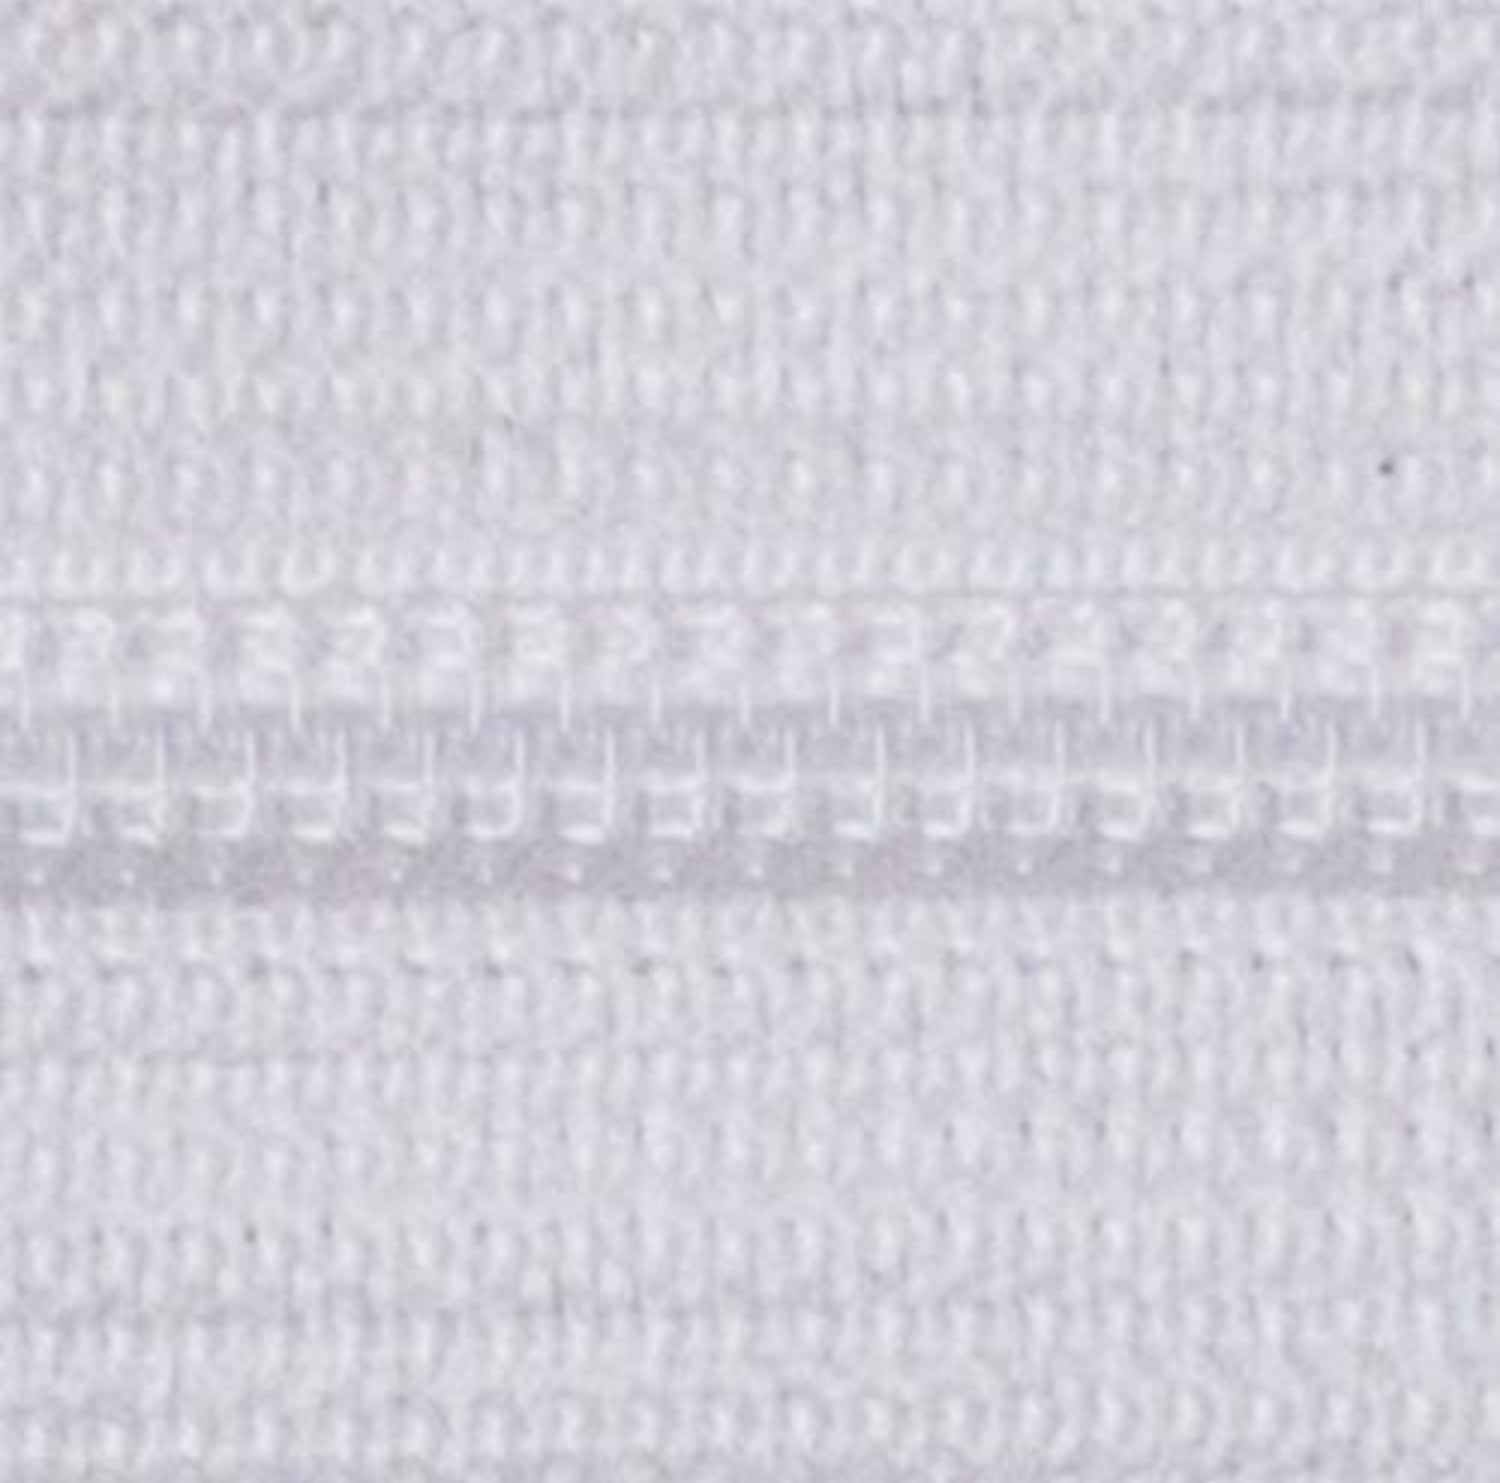 YKK White Ziplon Invisible Zipper 9 Inch